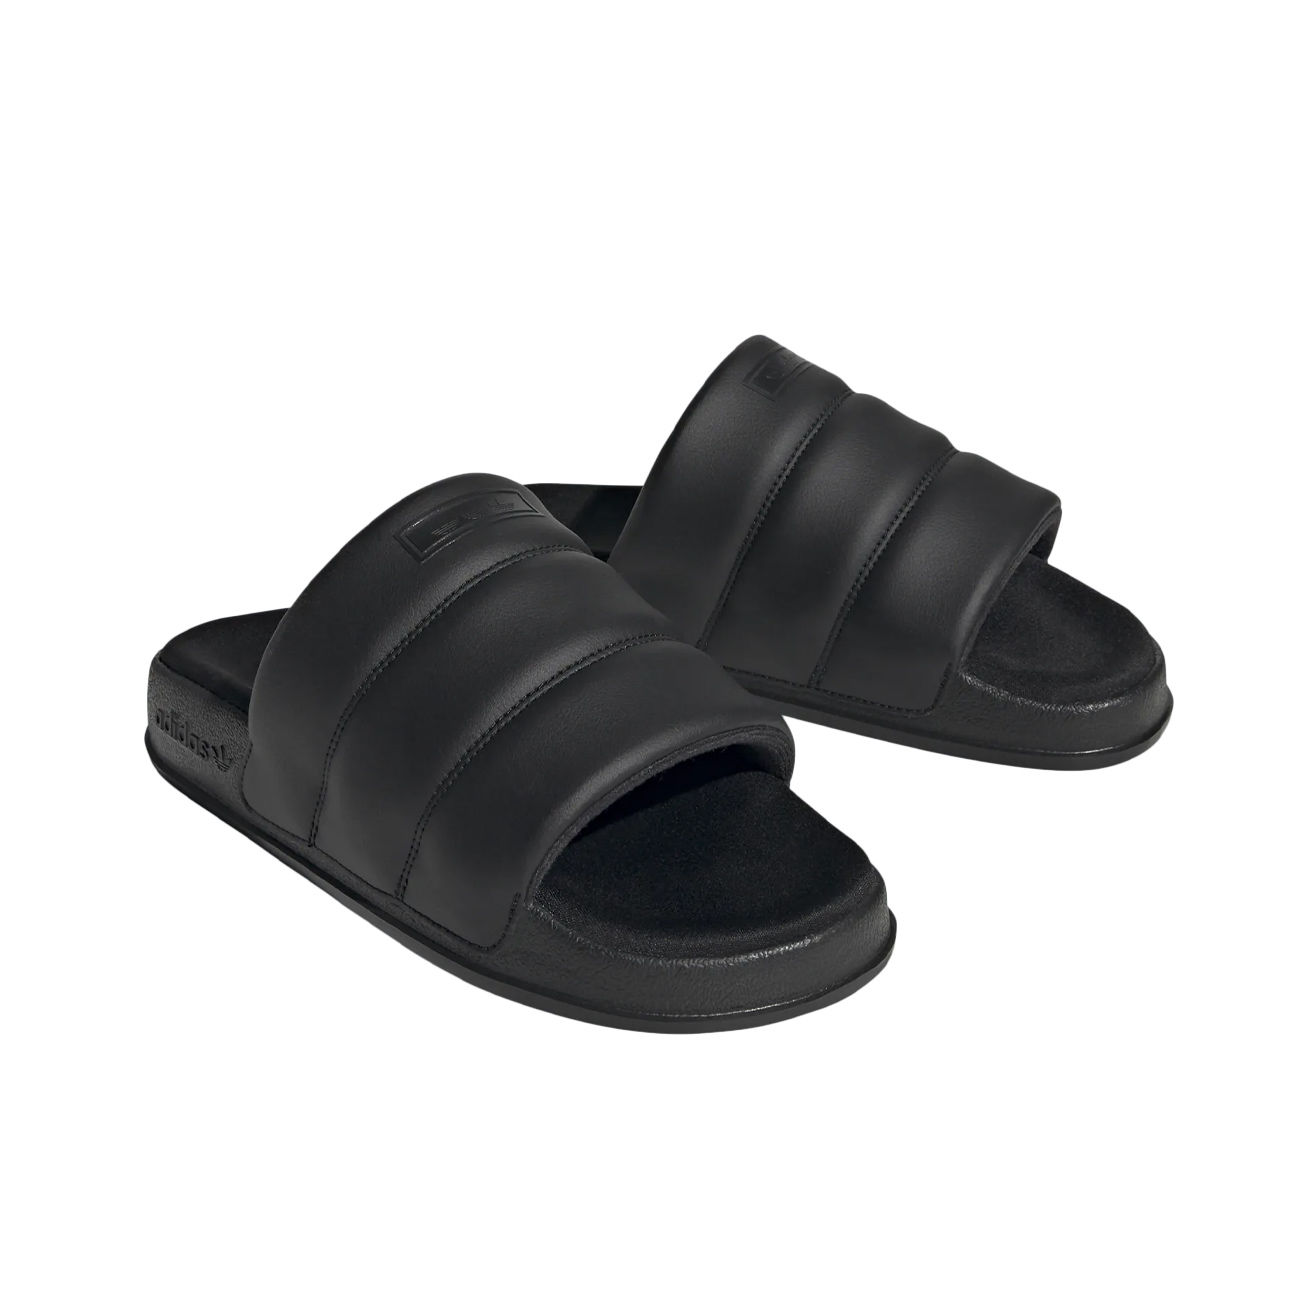 Buy adidas Sandals and Flip-Flops in Dubai, UAE for Men & Women | SSS-gemektower.com.vn